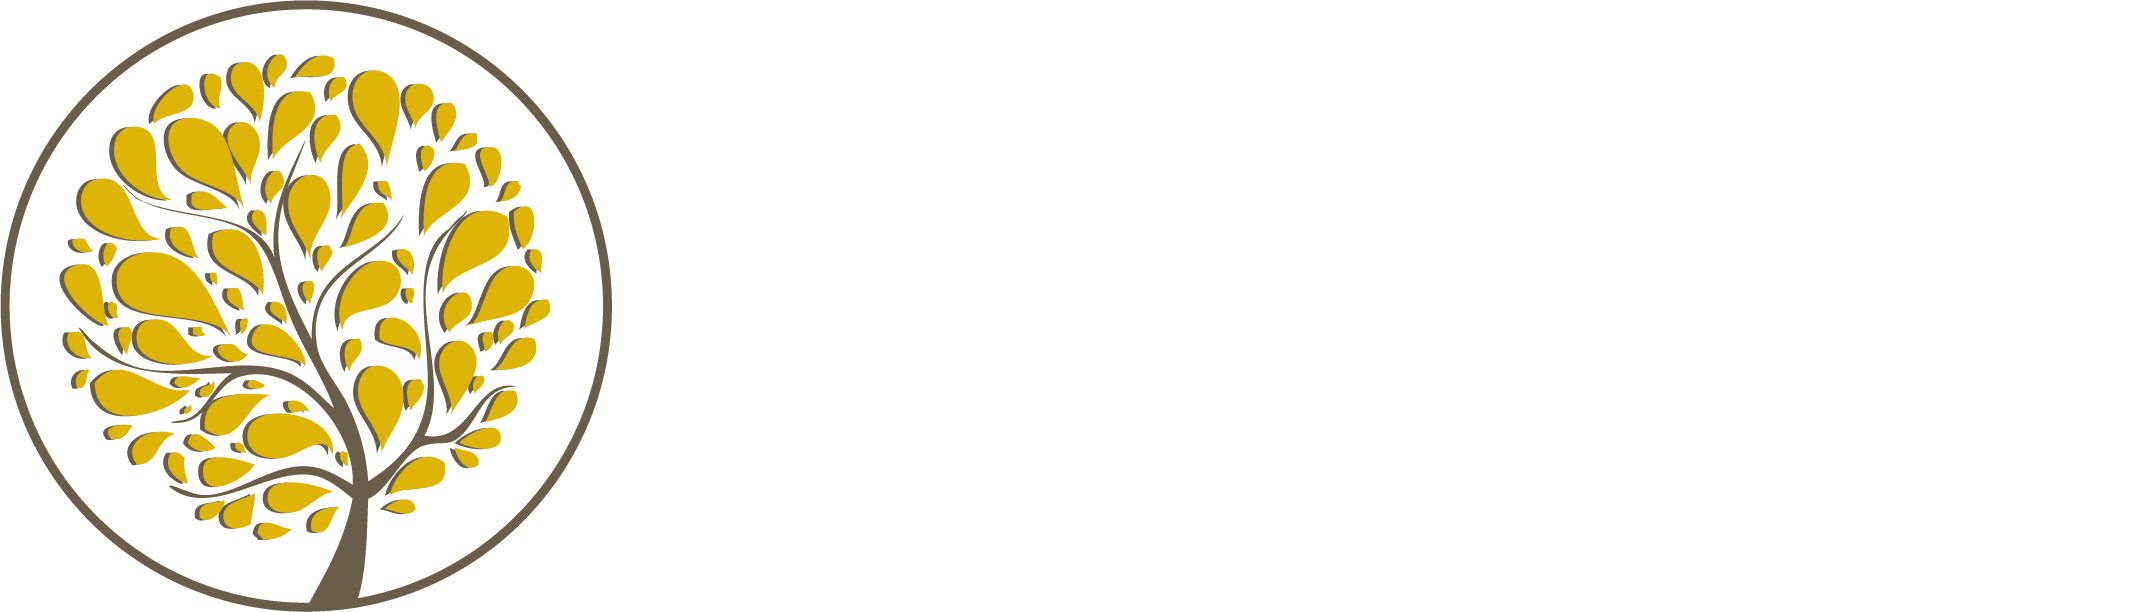 Creekside - Creekside Health & Rehabilitation Center